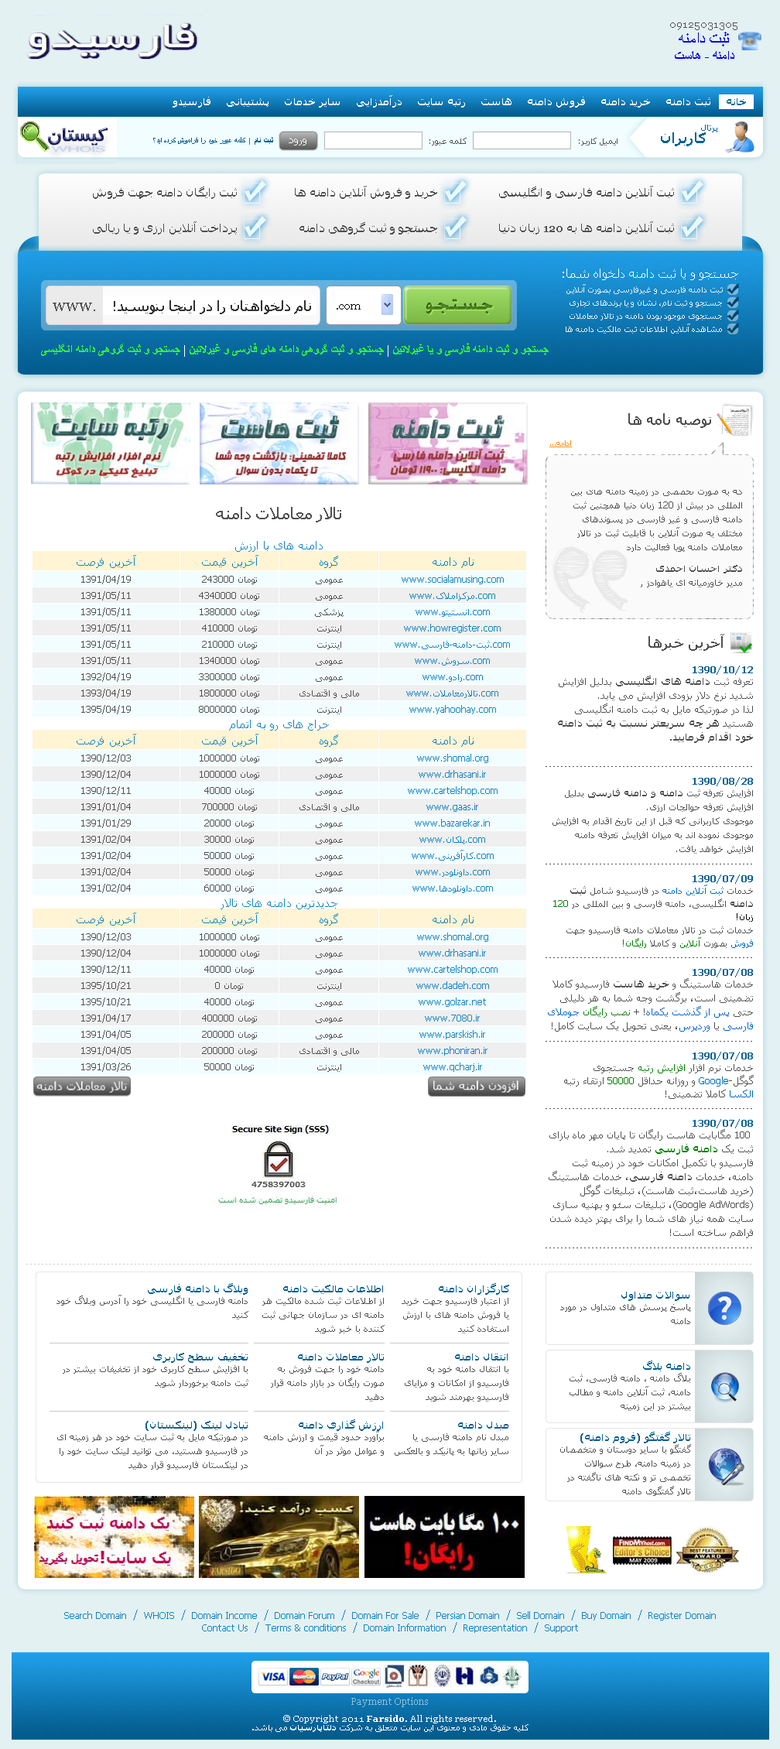 Farsido Domains Registration/Management Portal